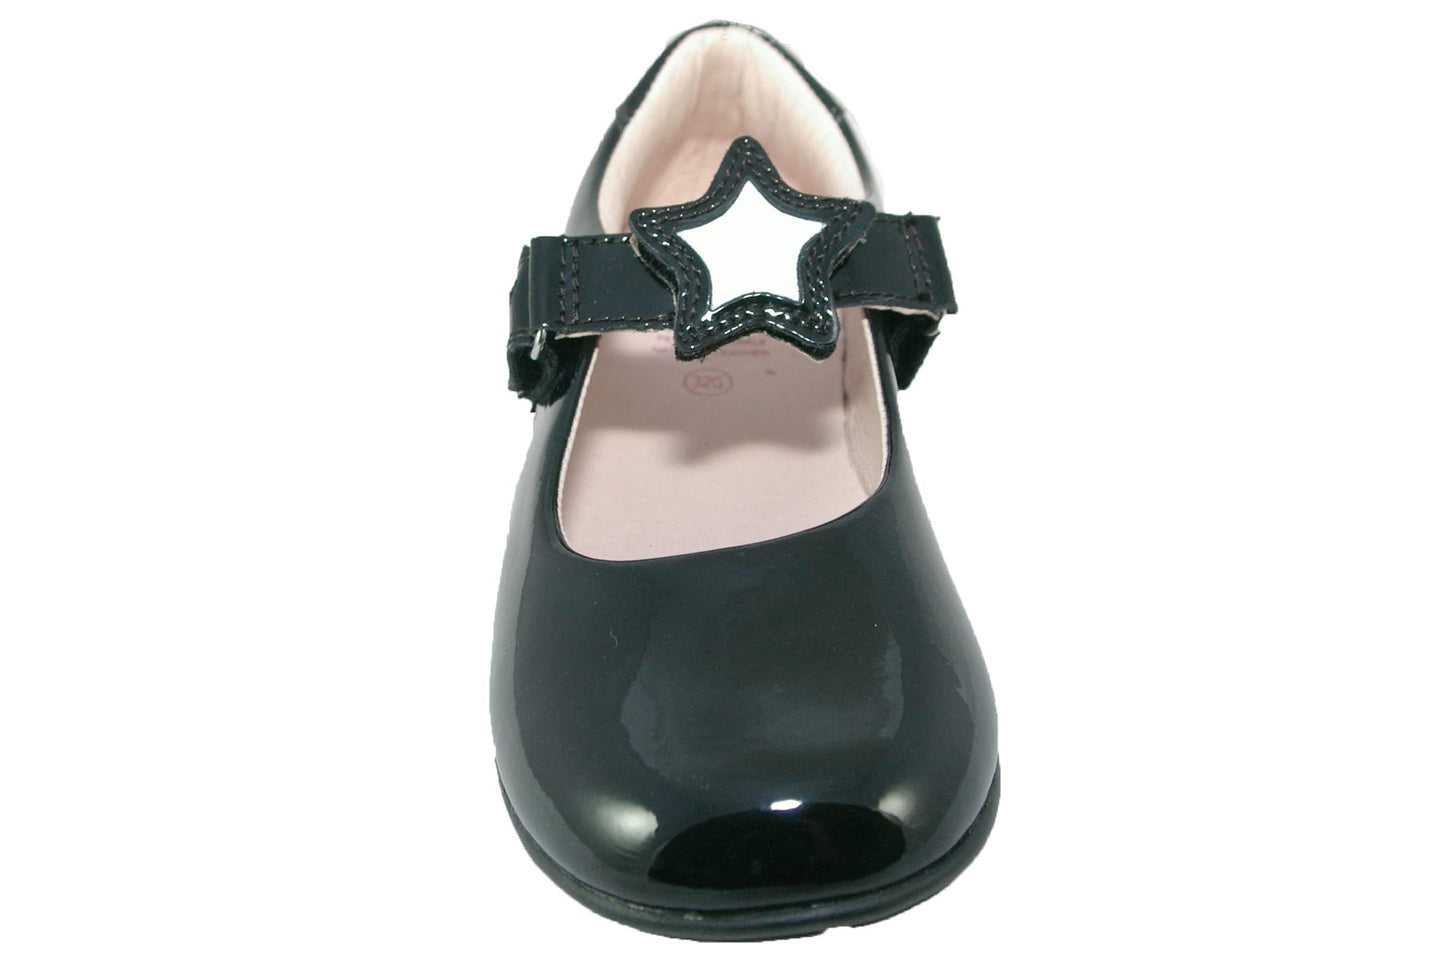 Lelli Kelly LK8640 (DB01) Colourissima Star Black Patent School Shoes G Fitting